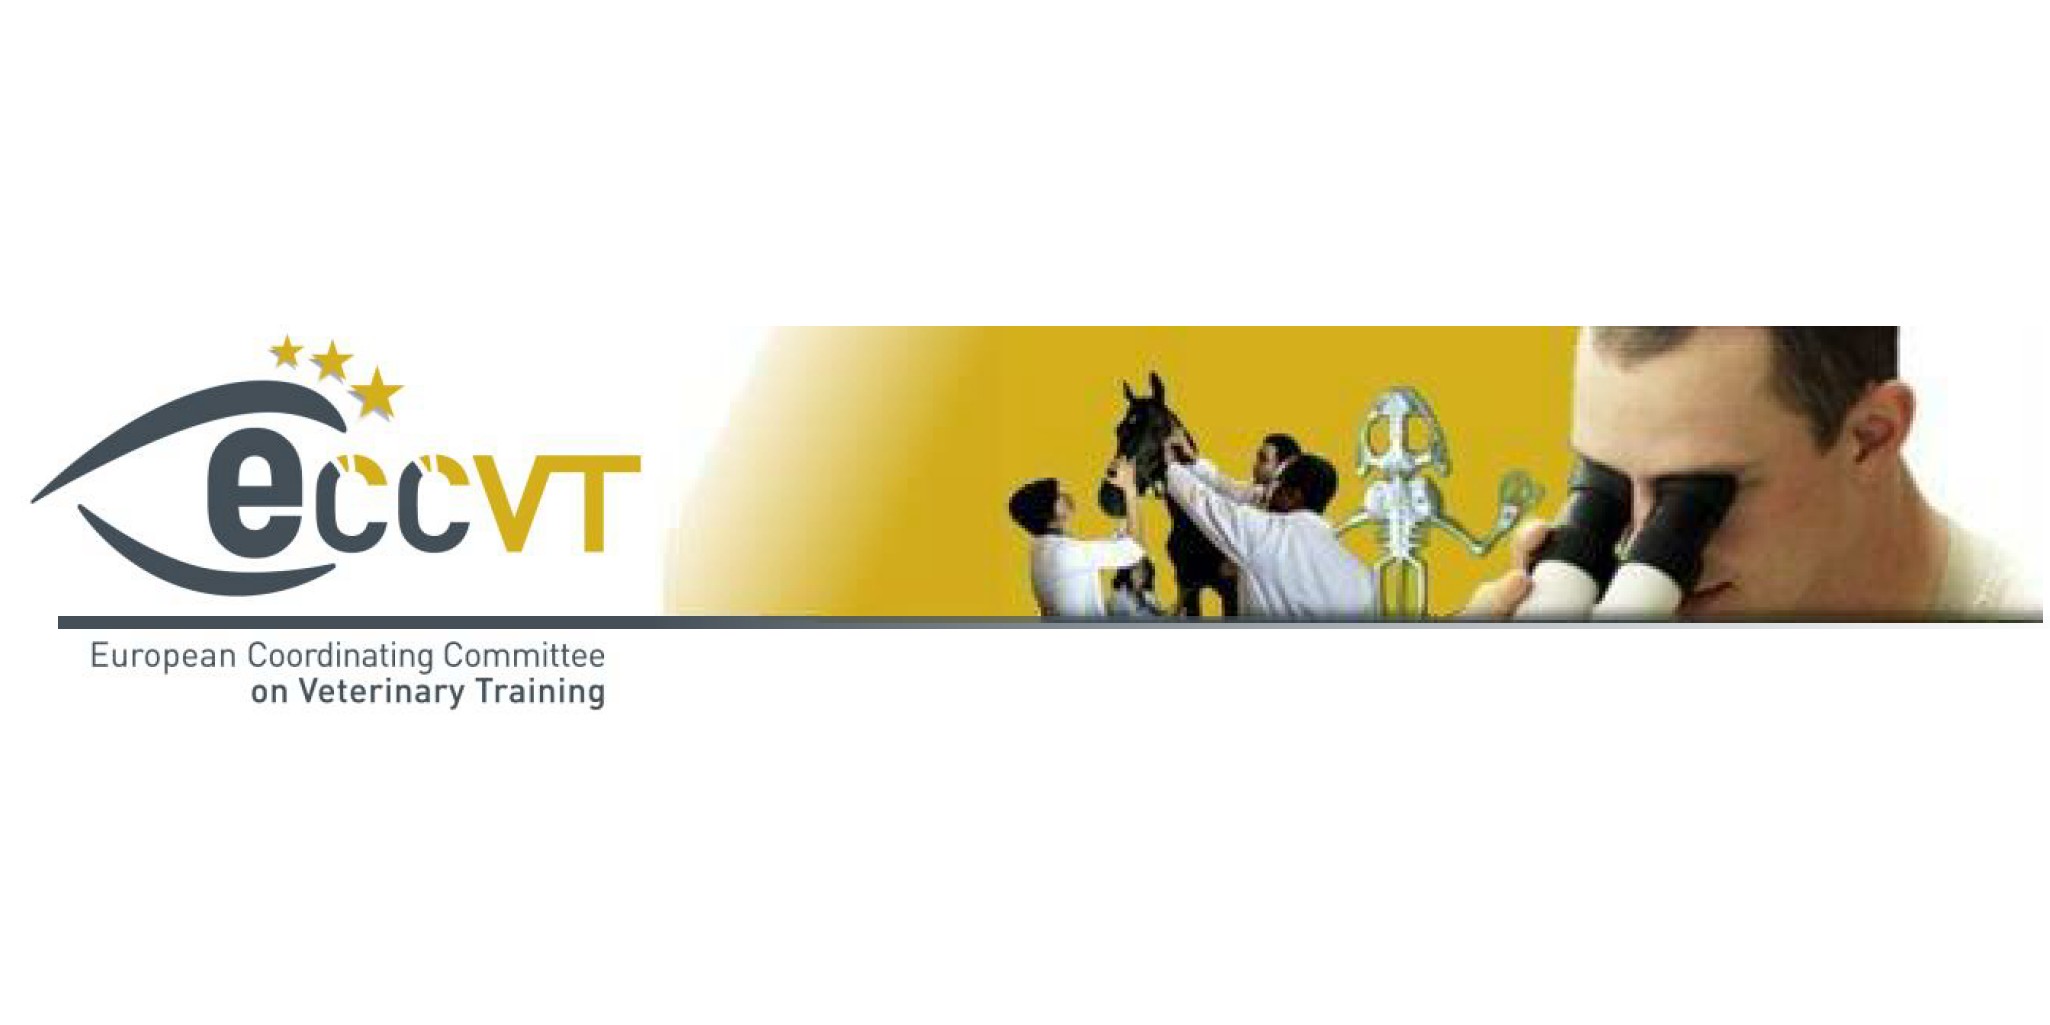 ECCVT - European Coordinating Committee on Veterinary Training